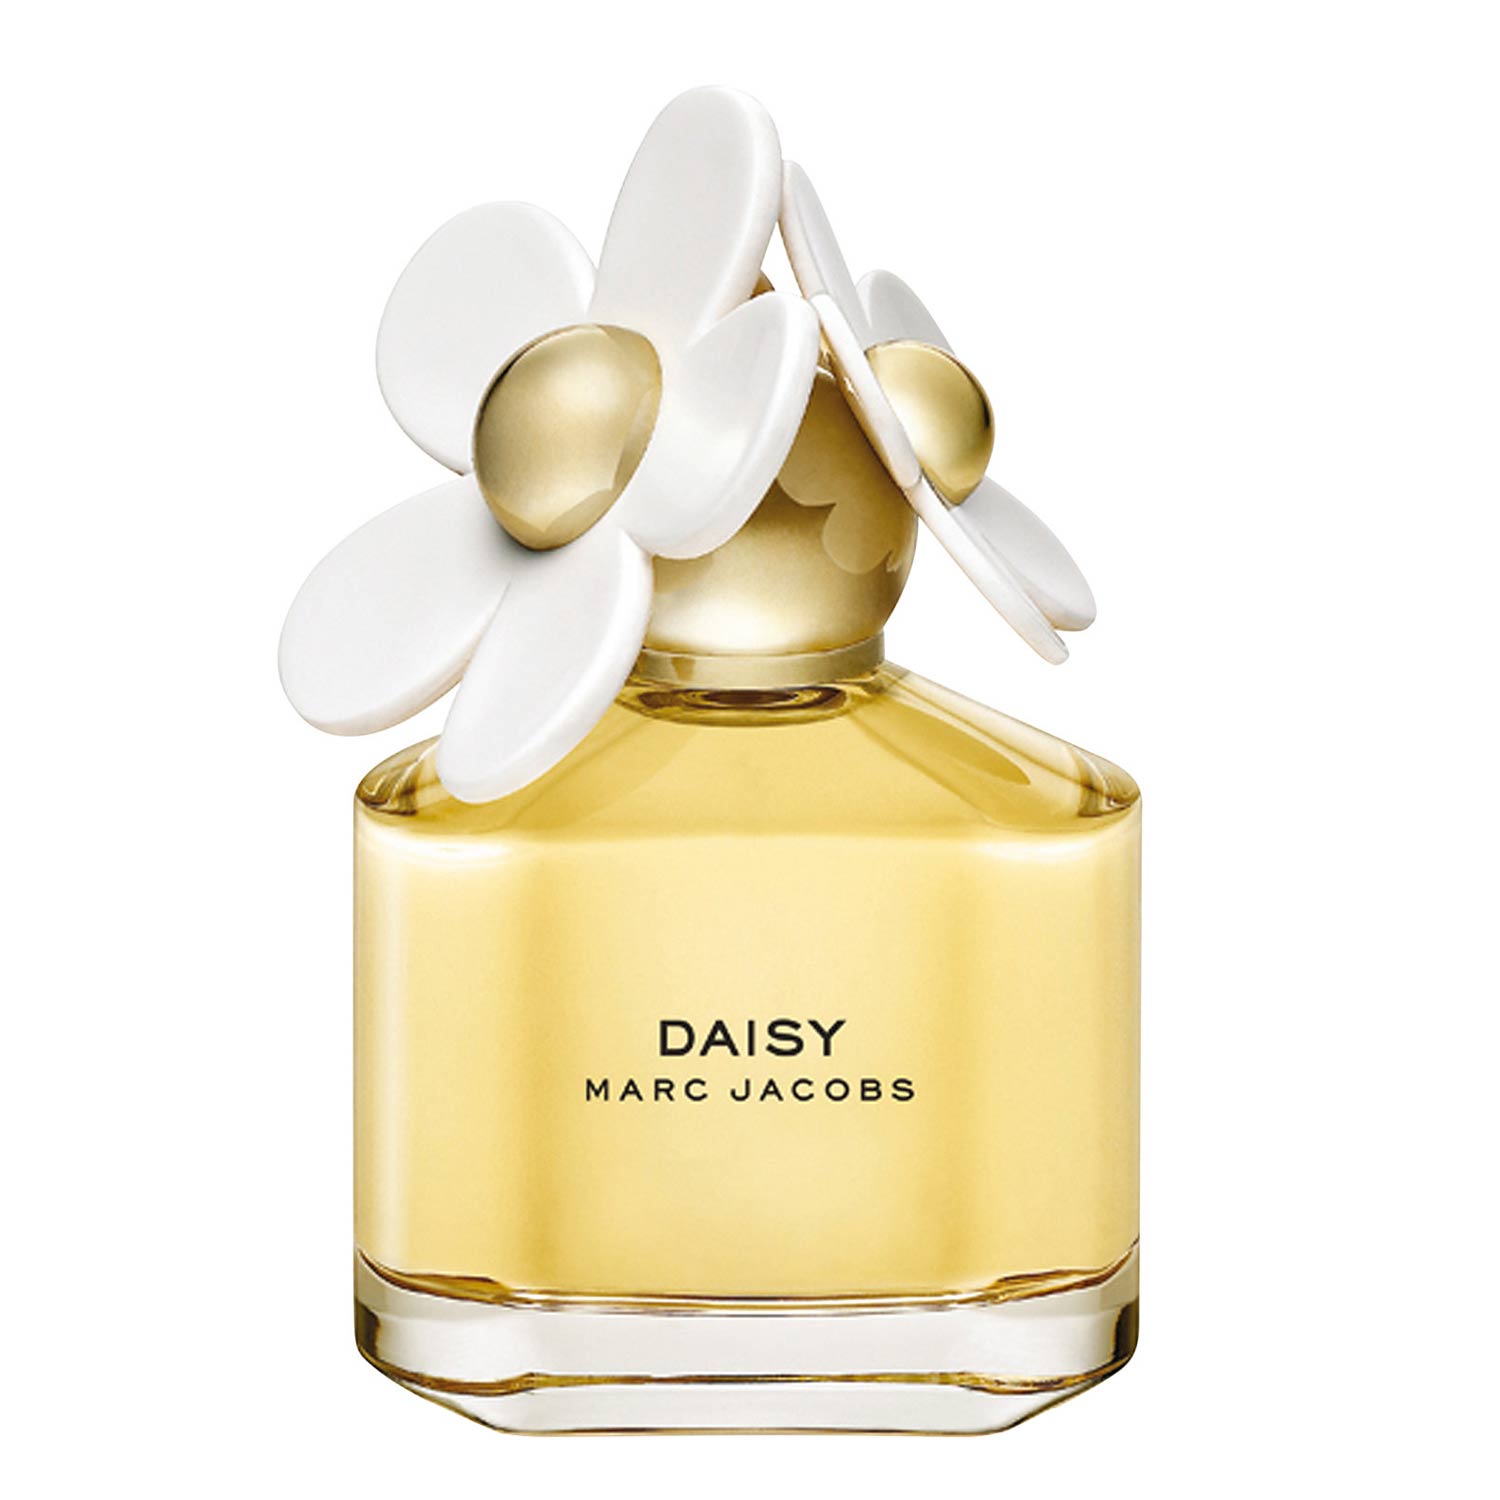 Daisy Perfume by Marc Jacobs @ Perfume Emporium Fragrance